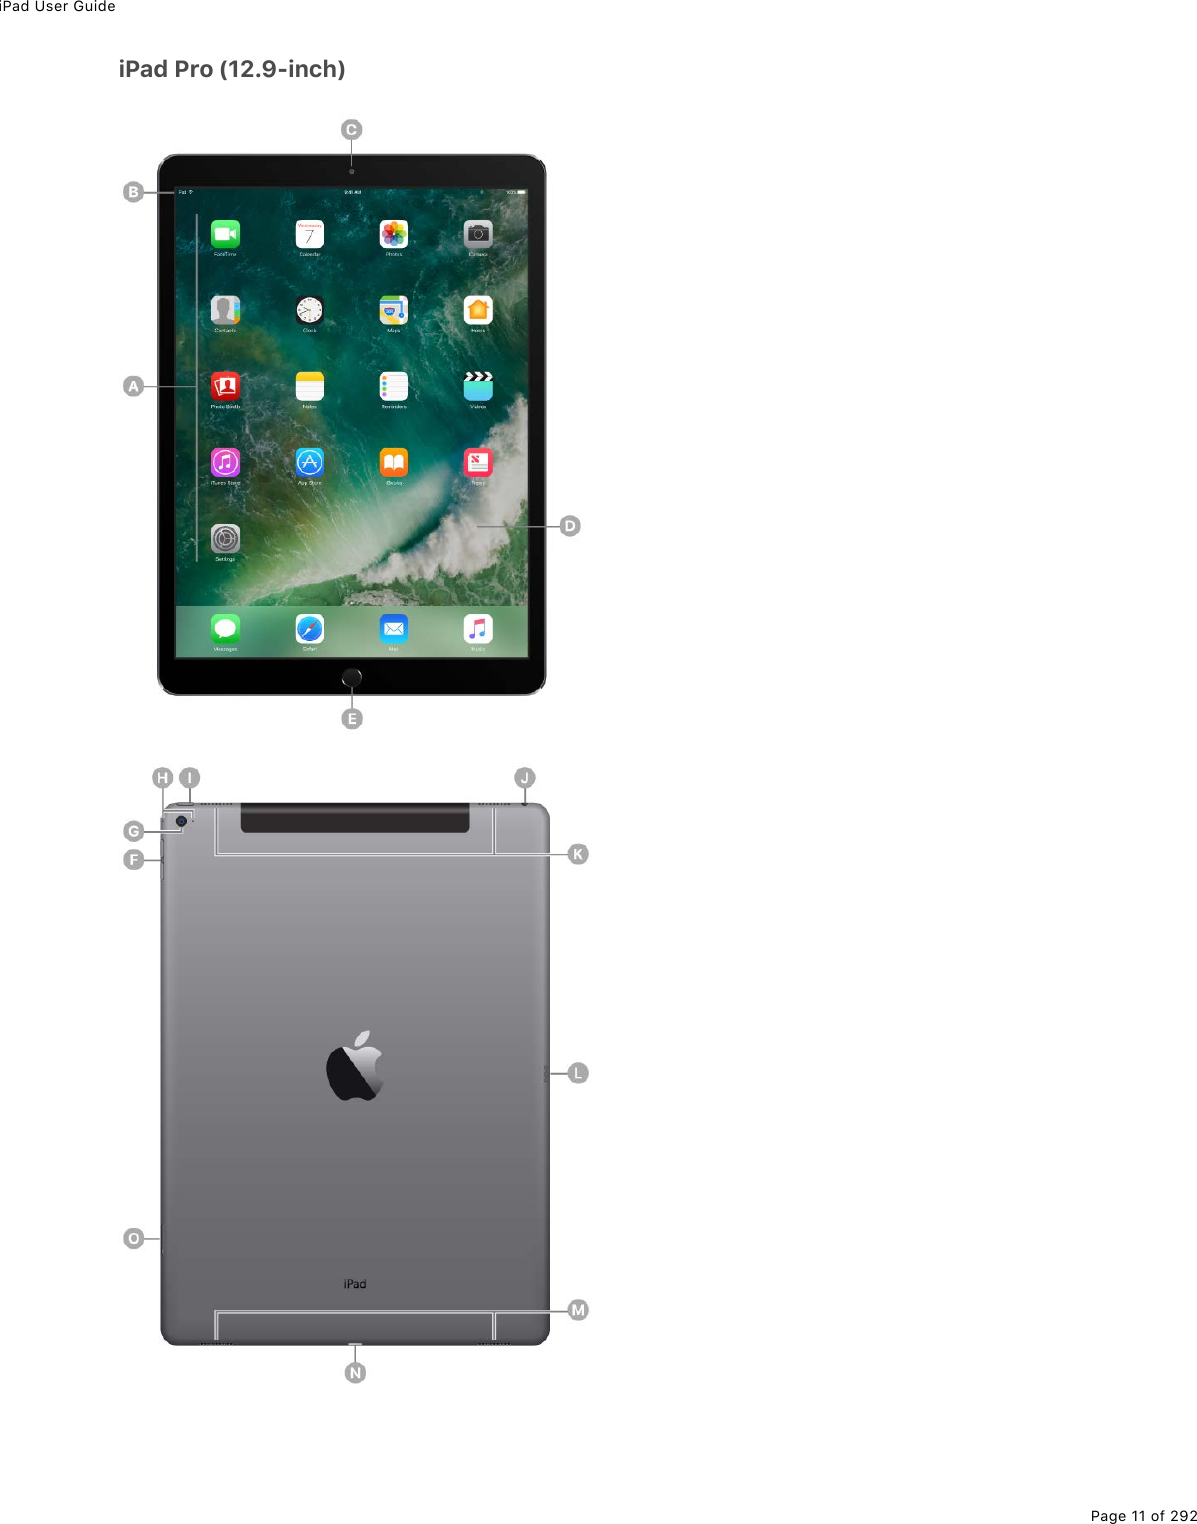 iPad User GuidePage 11 of 292iPad Pro (12.9-inch)